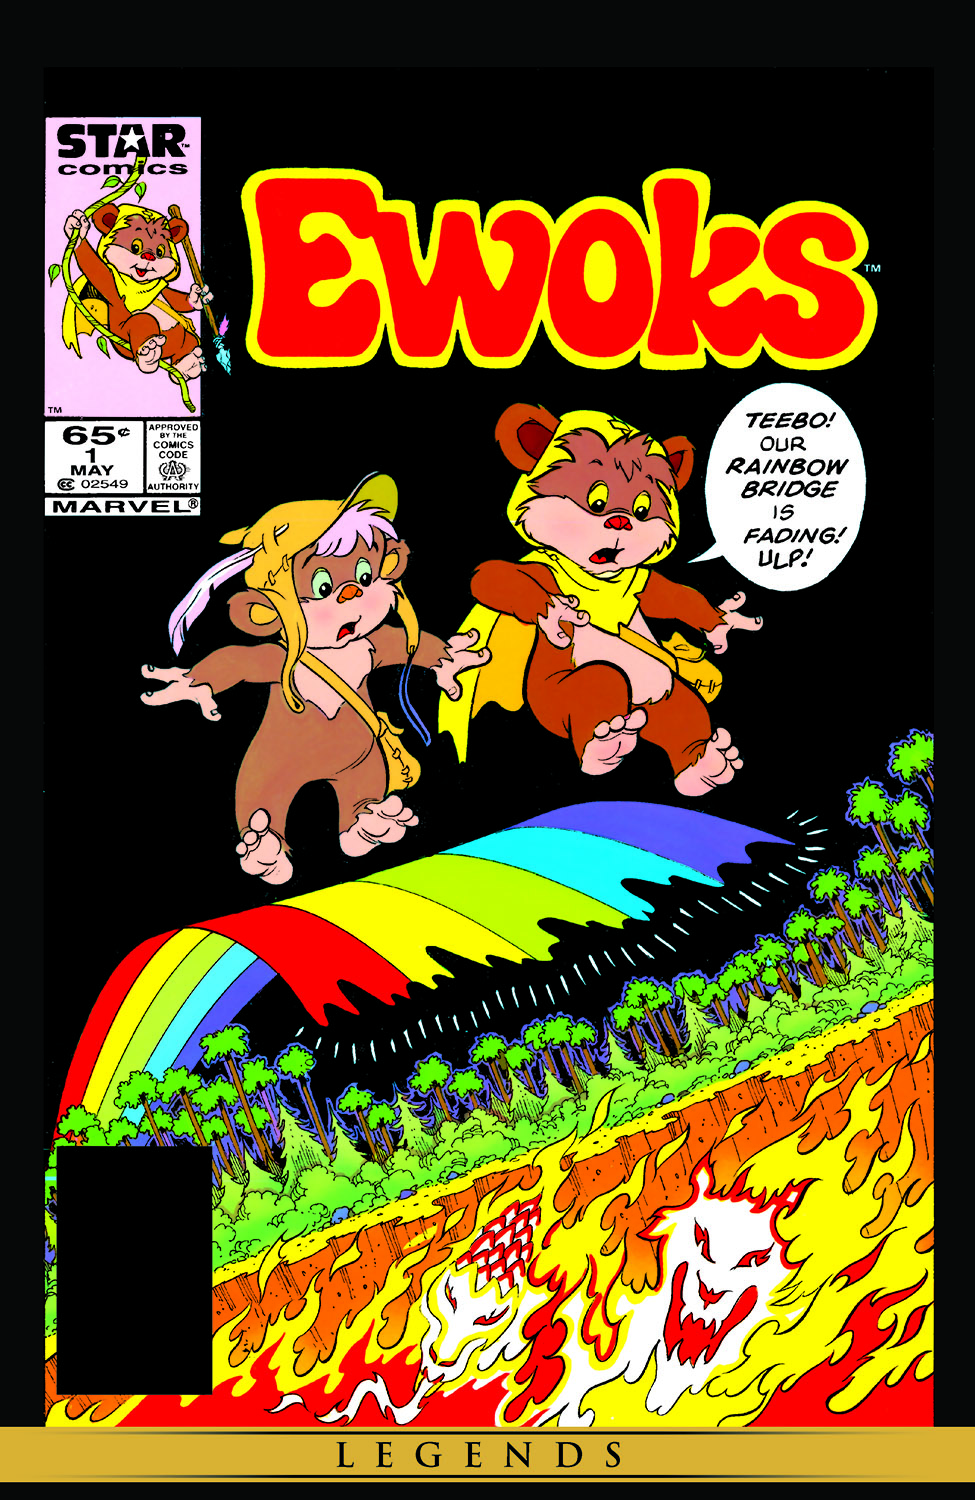 Star Wars: Ewoks (1985) #1